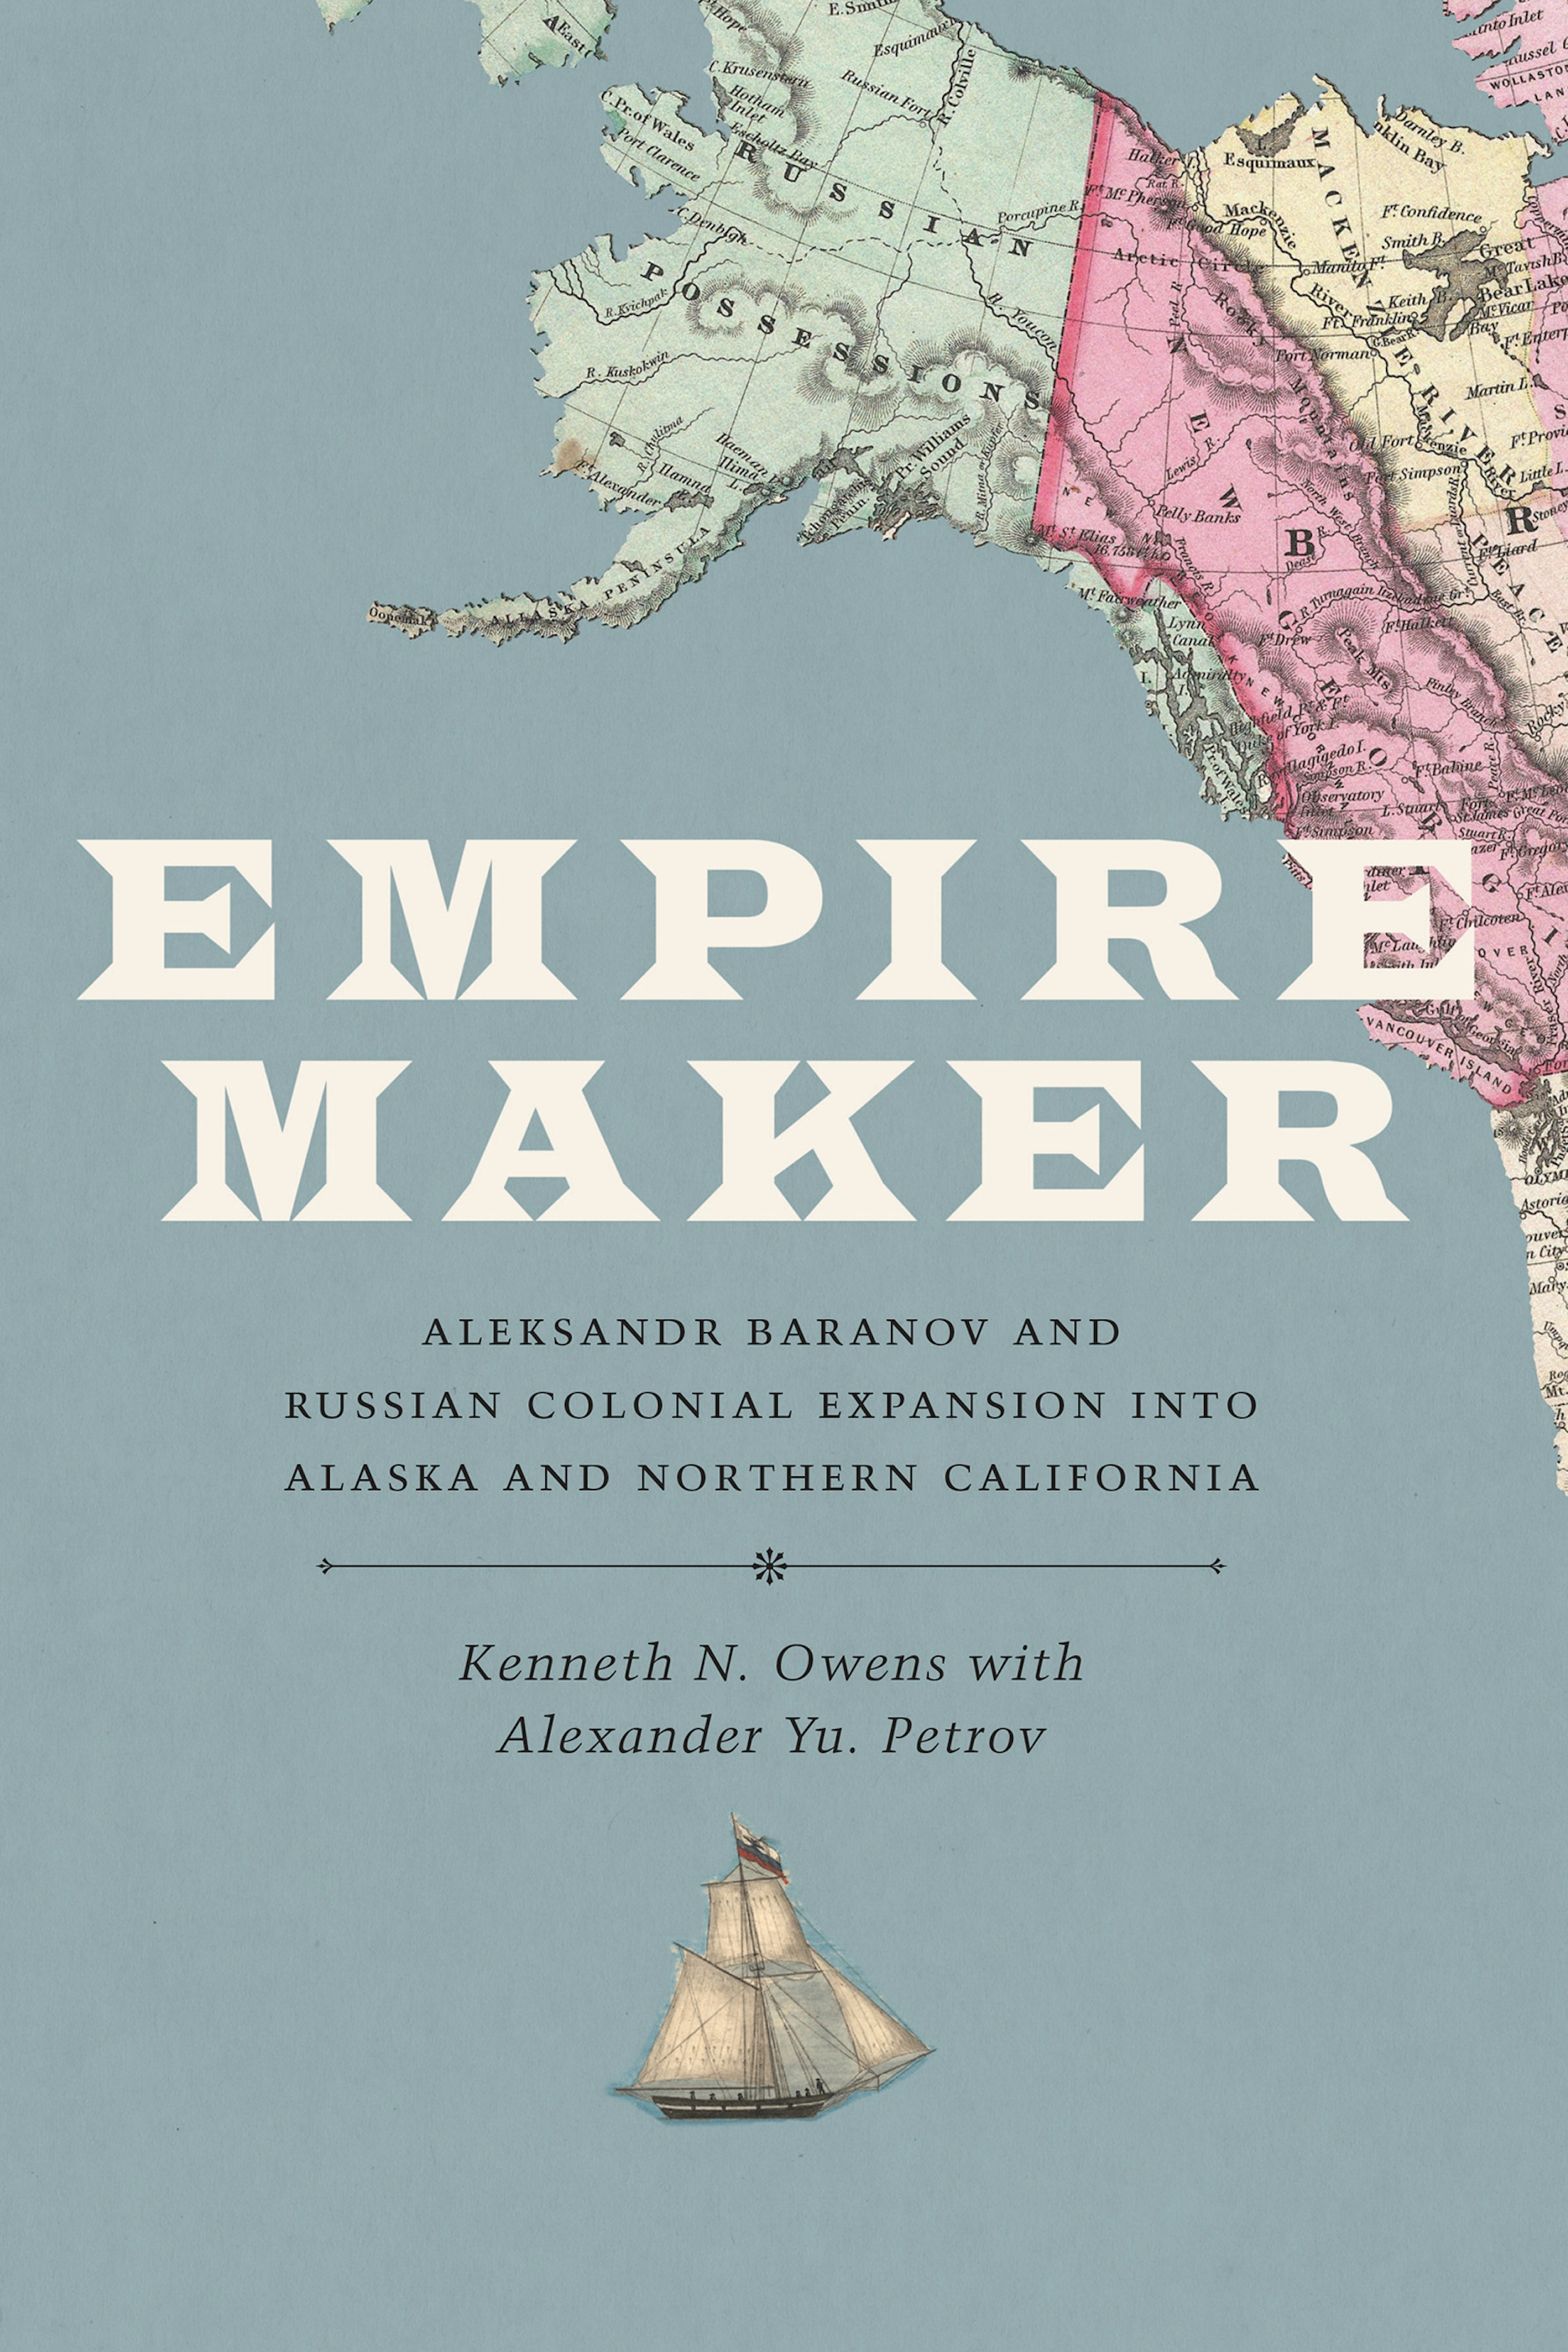 Empire Maker